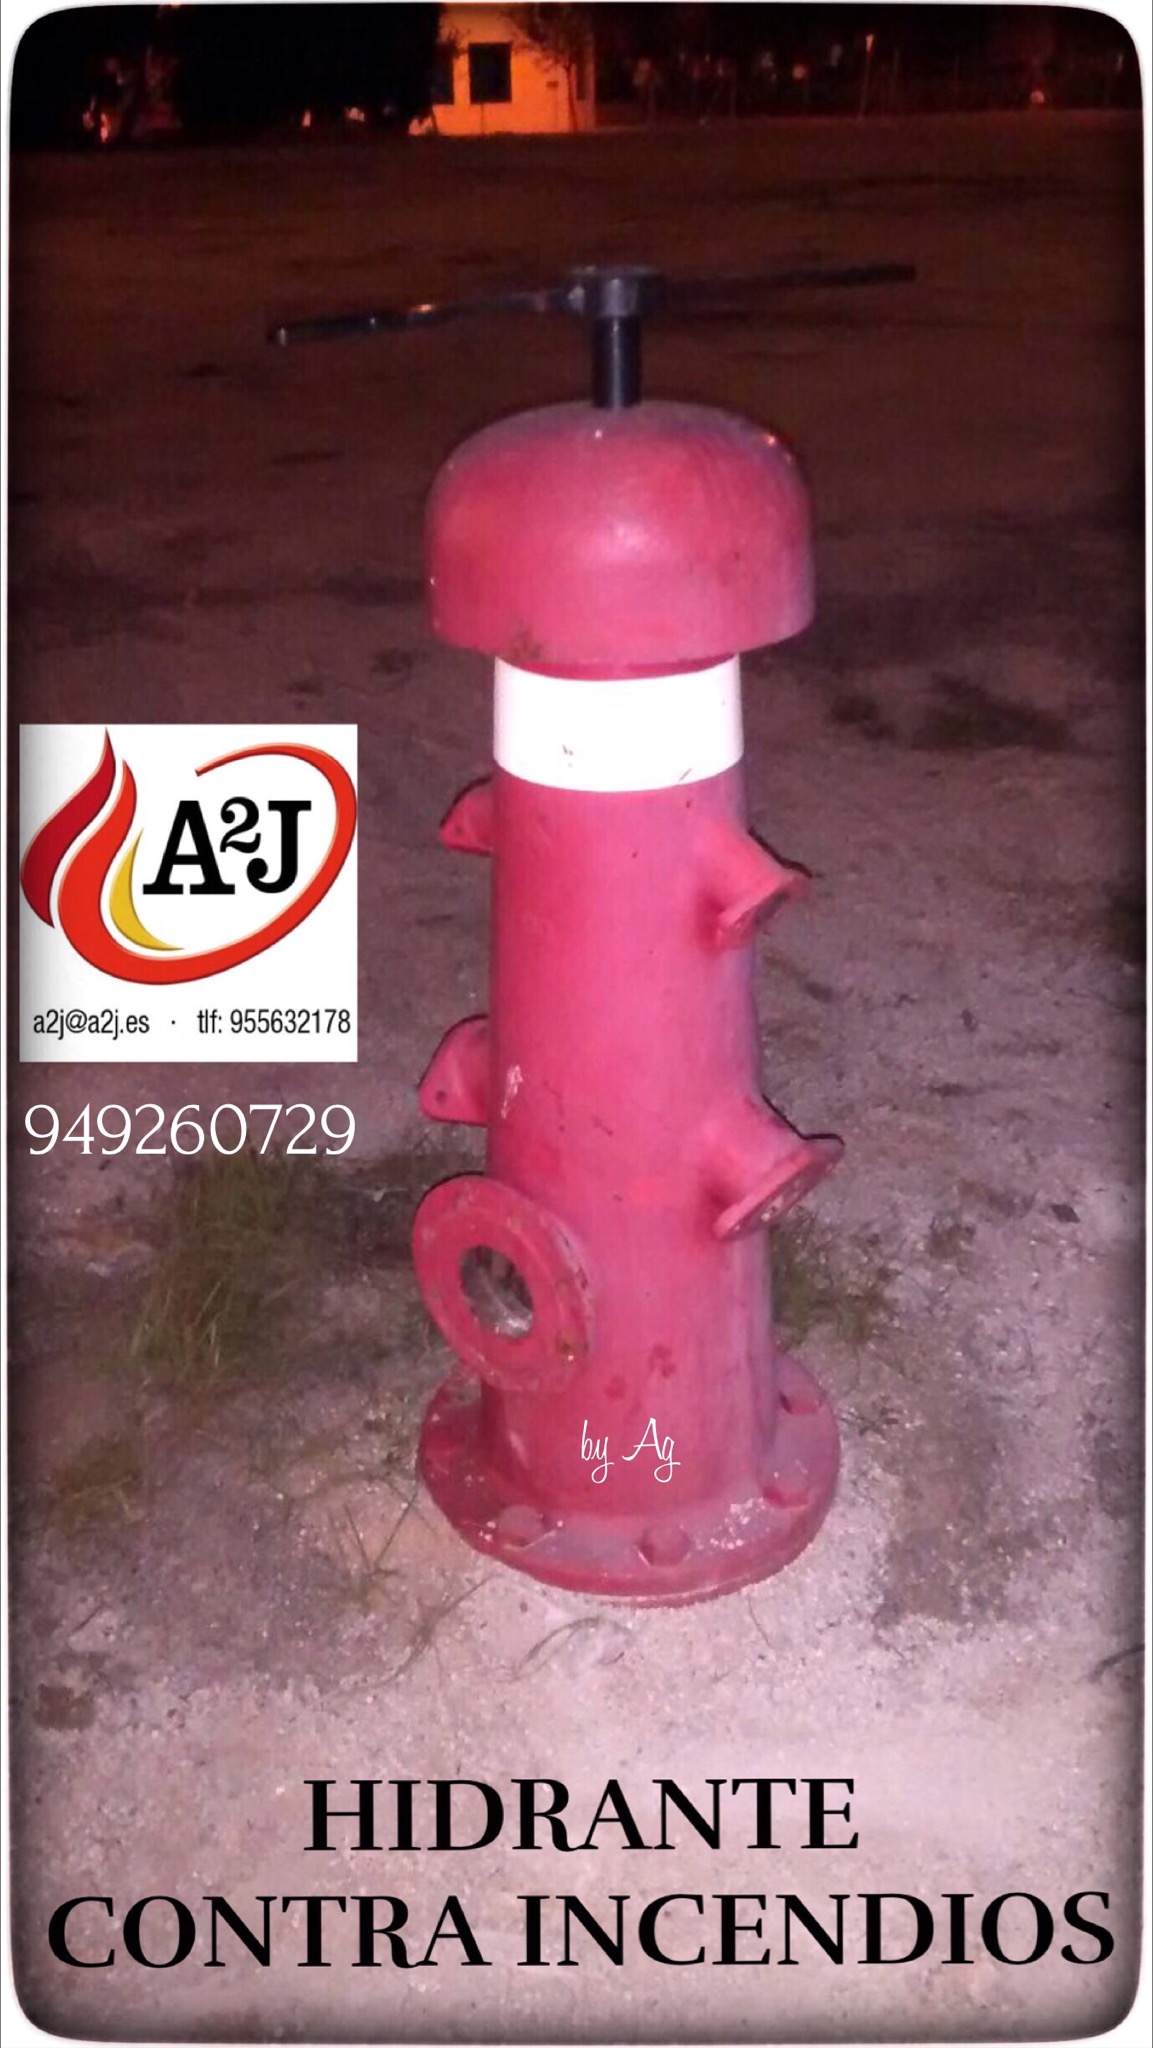 Extintores Alcalá de henares hidrantes contra incendios-0.JPG